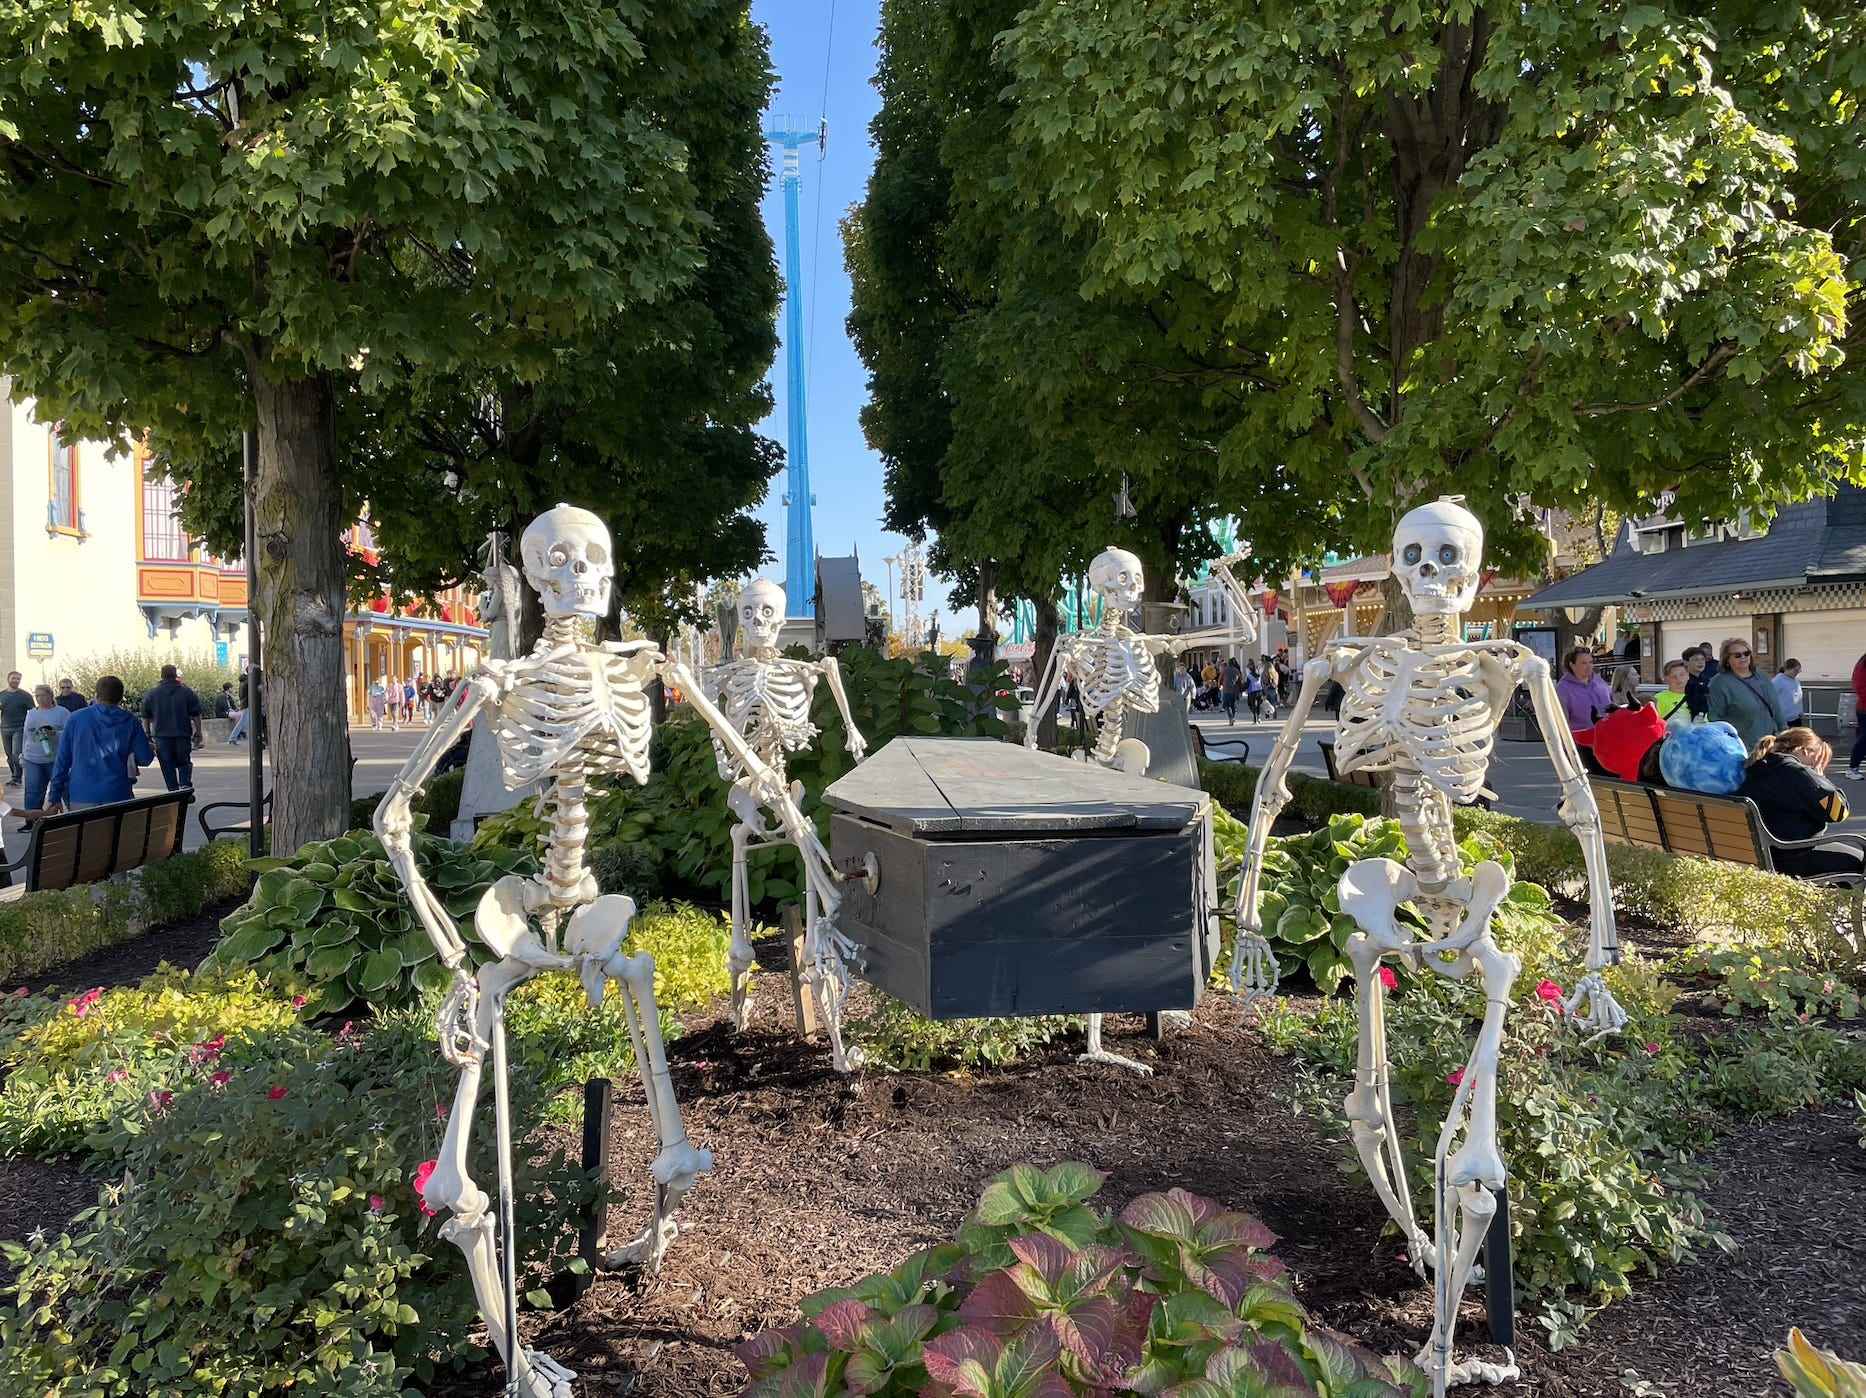 Skelette am Cedar Point